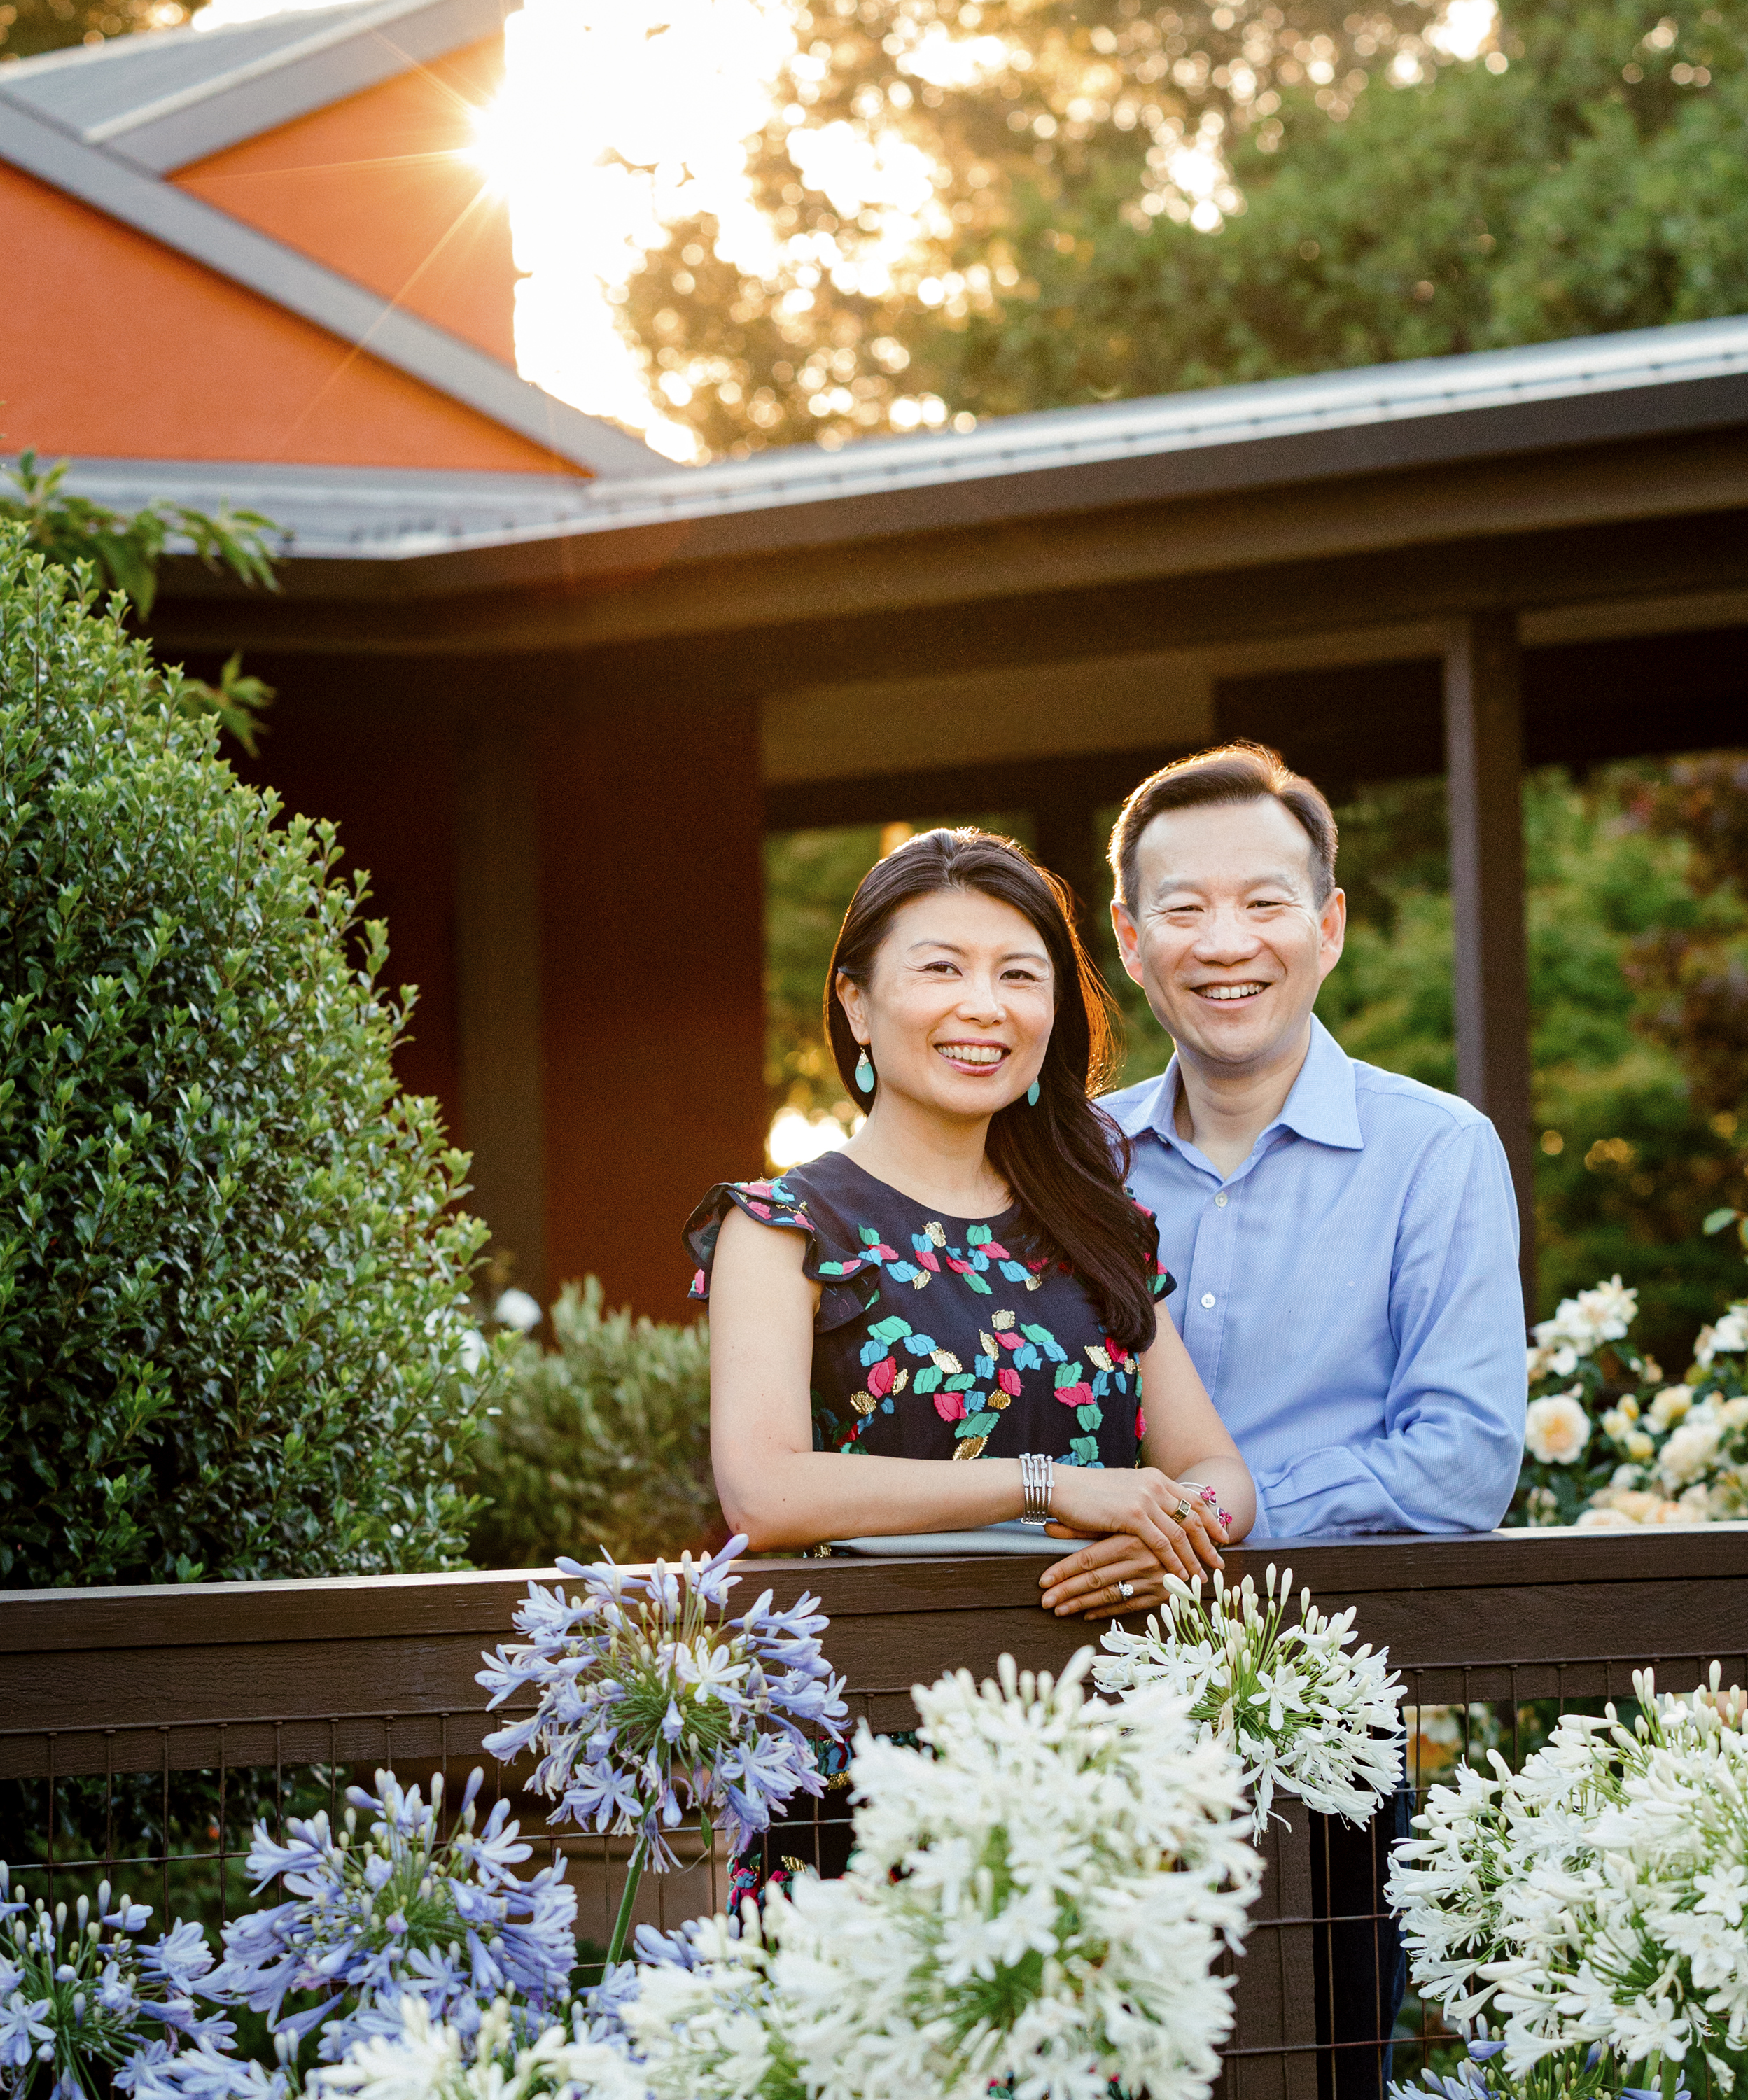 Sally Yu and Jeff Shen